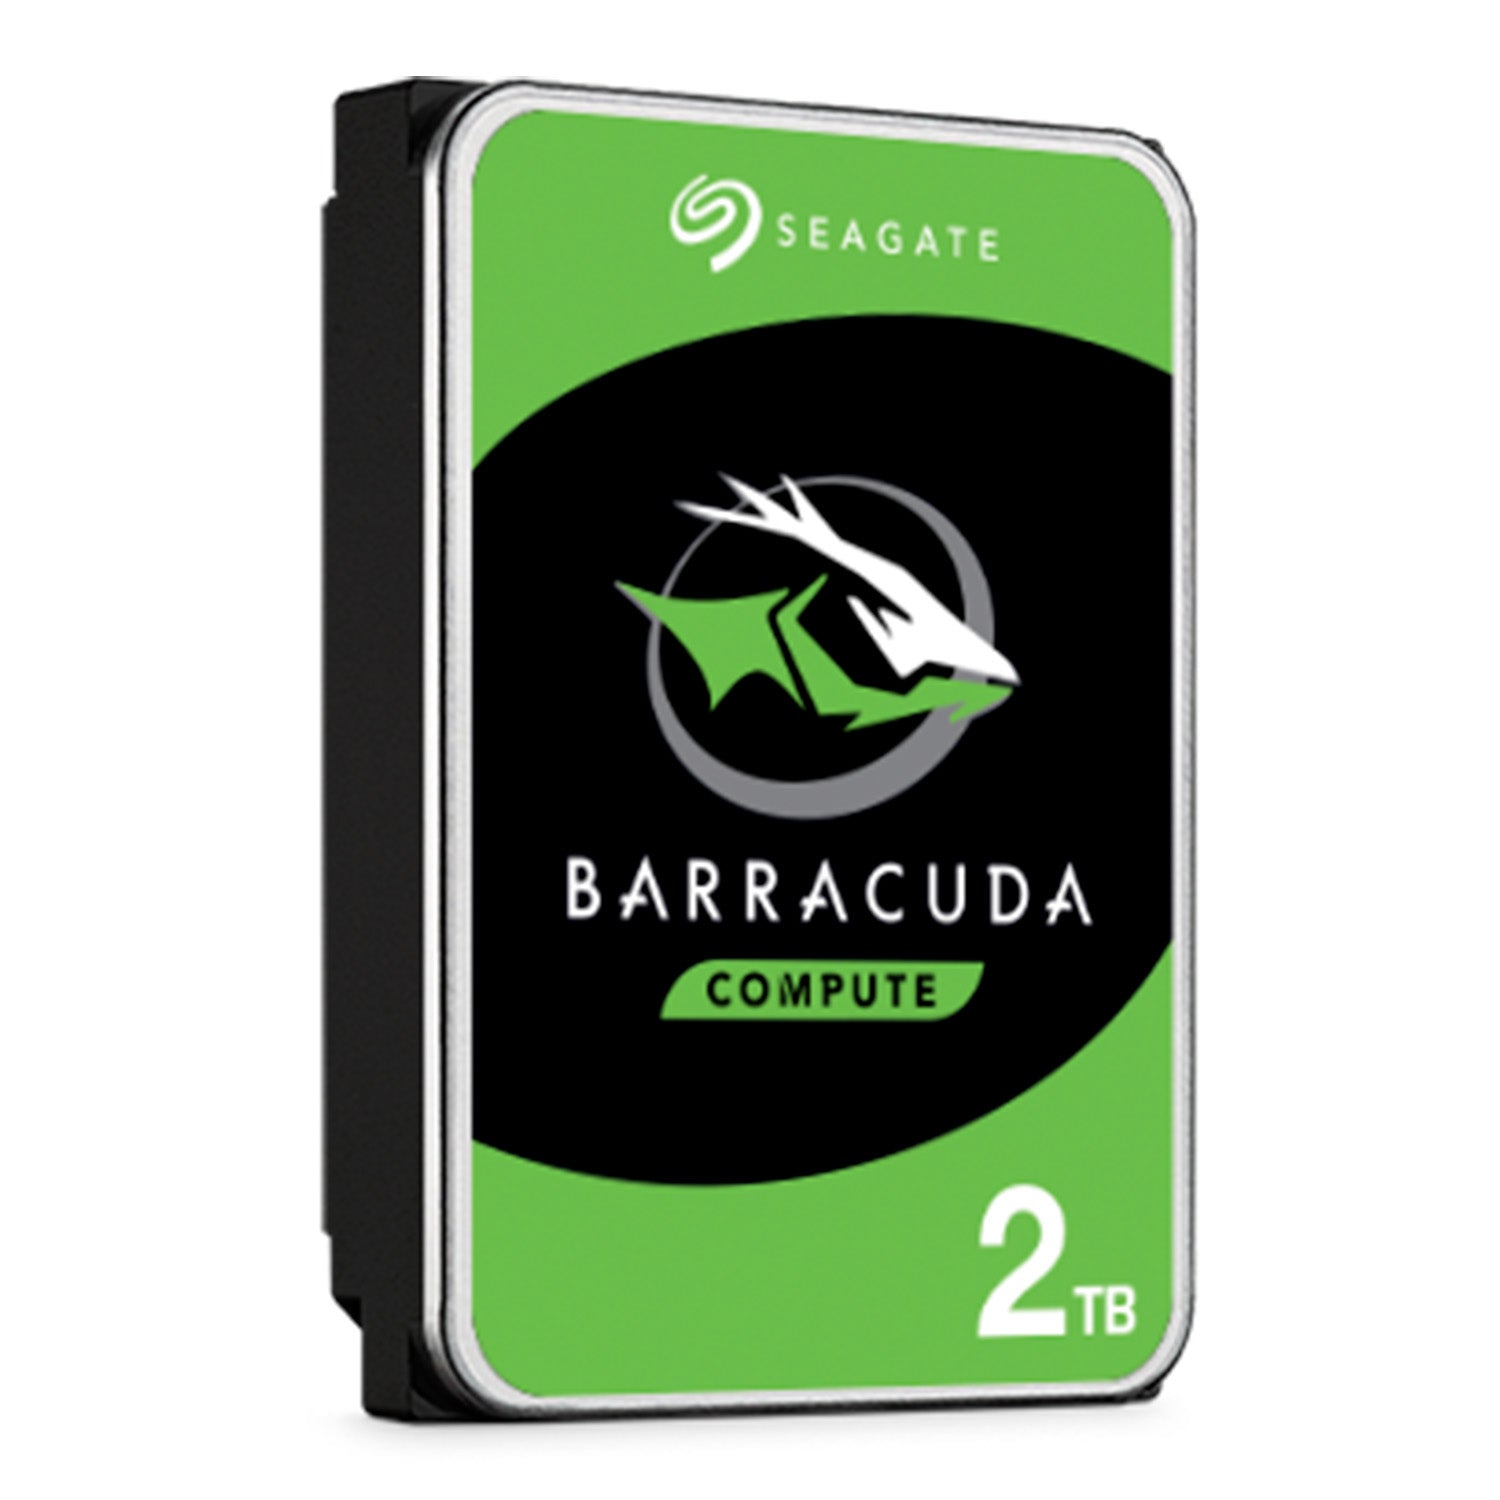 Seagate Barracuda 2TB Internal Hard Drive HDD (3.5 Inch) SATA 6 Gb/s 7200 RPM 256 MB Cache - High performance for Computer Desktop PC (ST2000DM008)